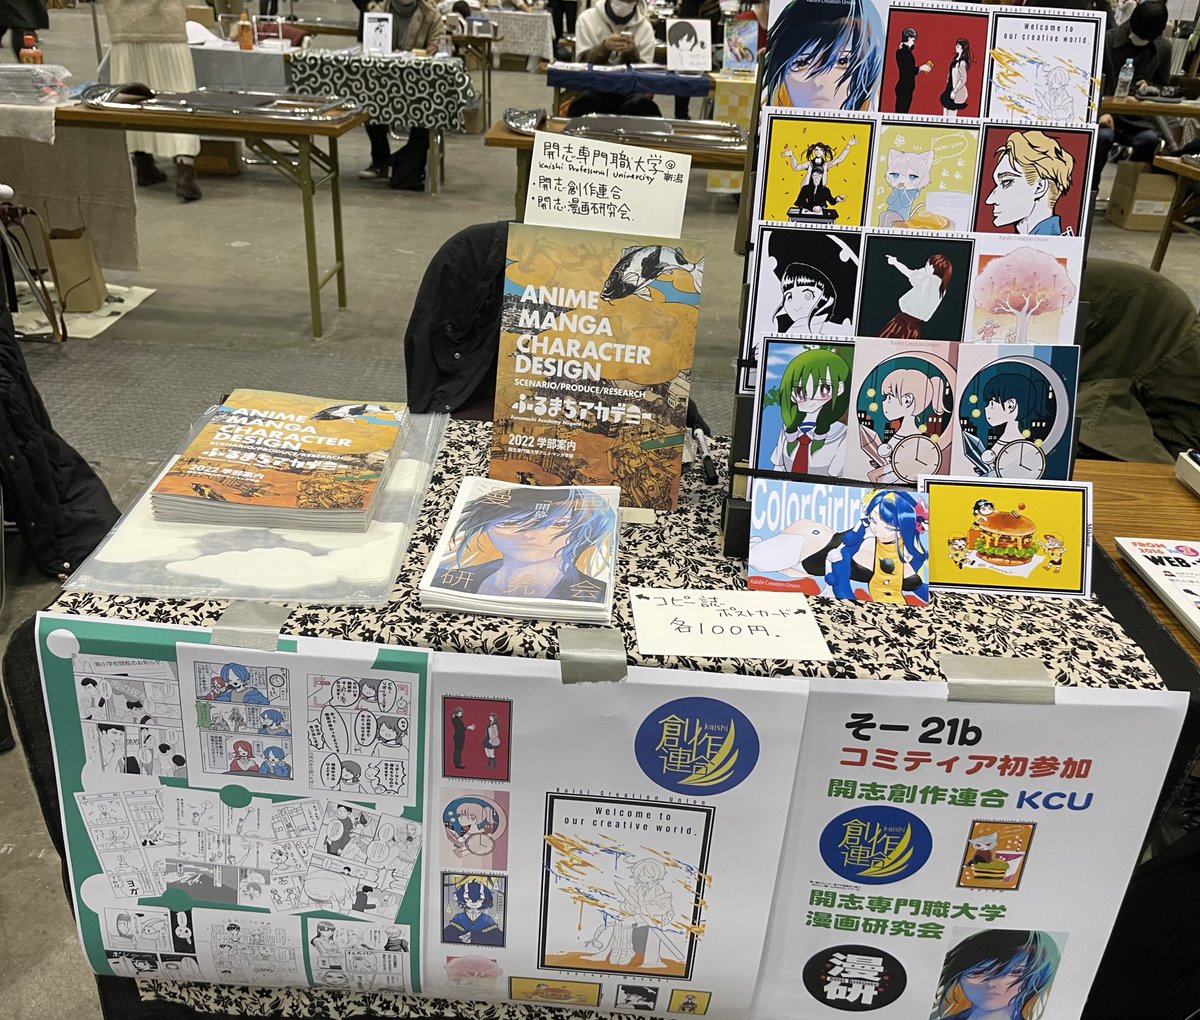 COMITIA139 開志専門職大学・開志創作連合@kaishisousaku1 開志漫画研究会 そ21b設営完了です。なぜか売り子は日高です。hanemonoのお隣におります。よろしくお願いします。@kaishi_animan 